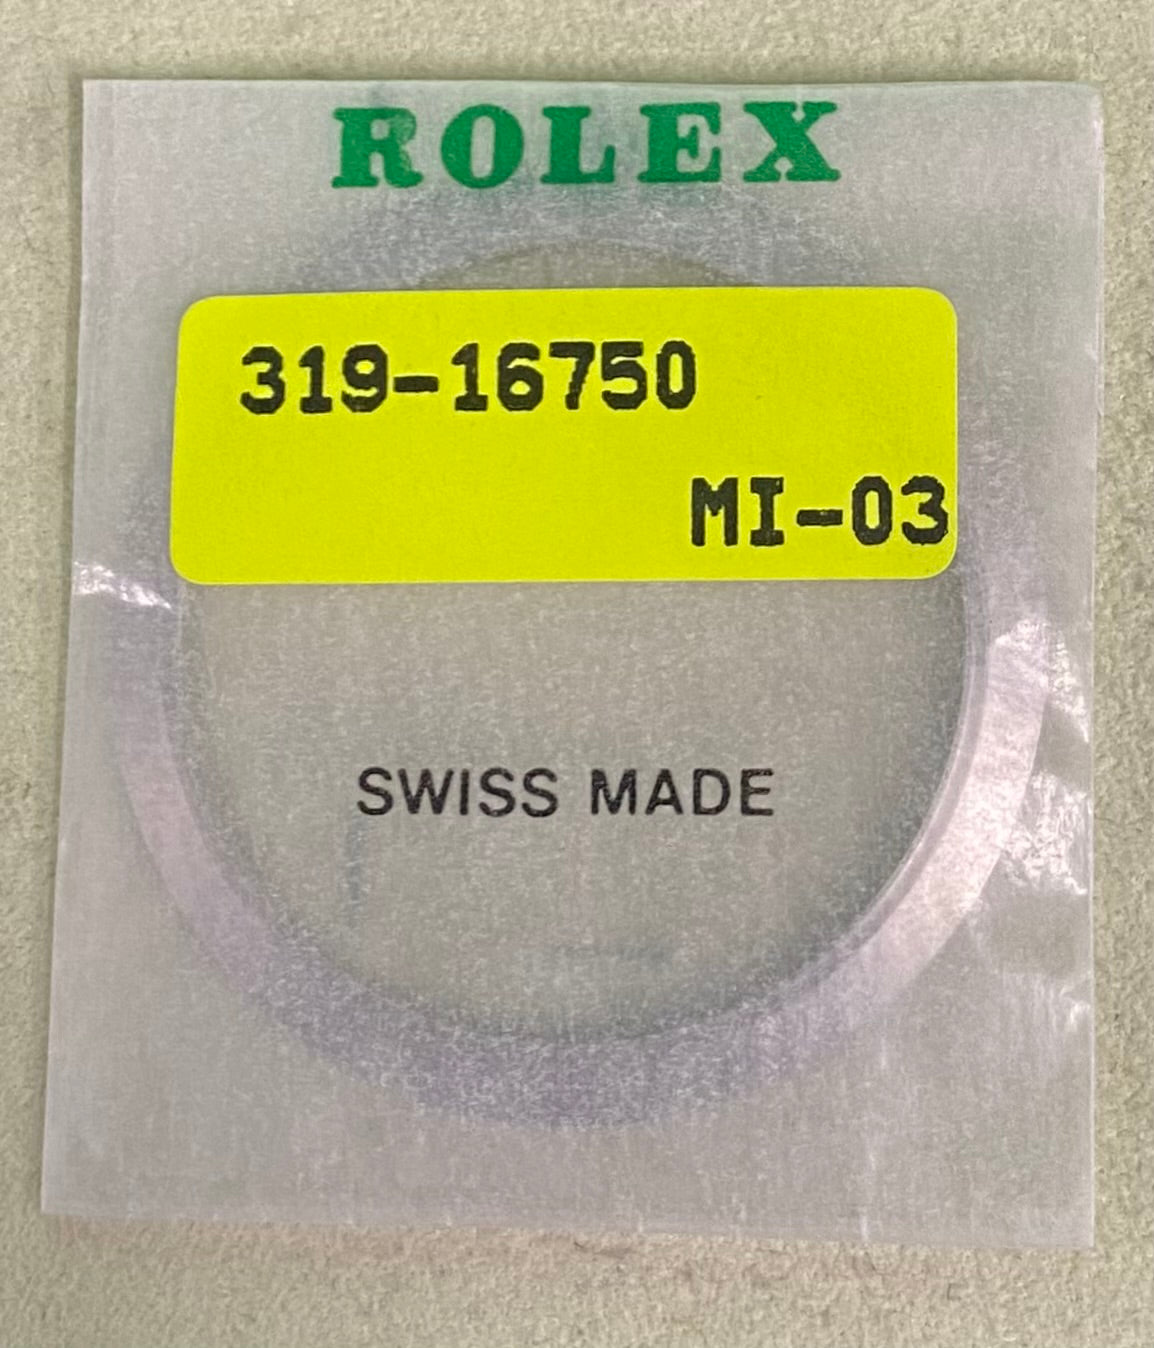 Rolex Bezel Securing Ring Part #319-16750